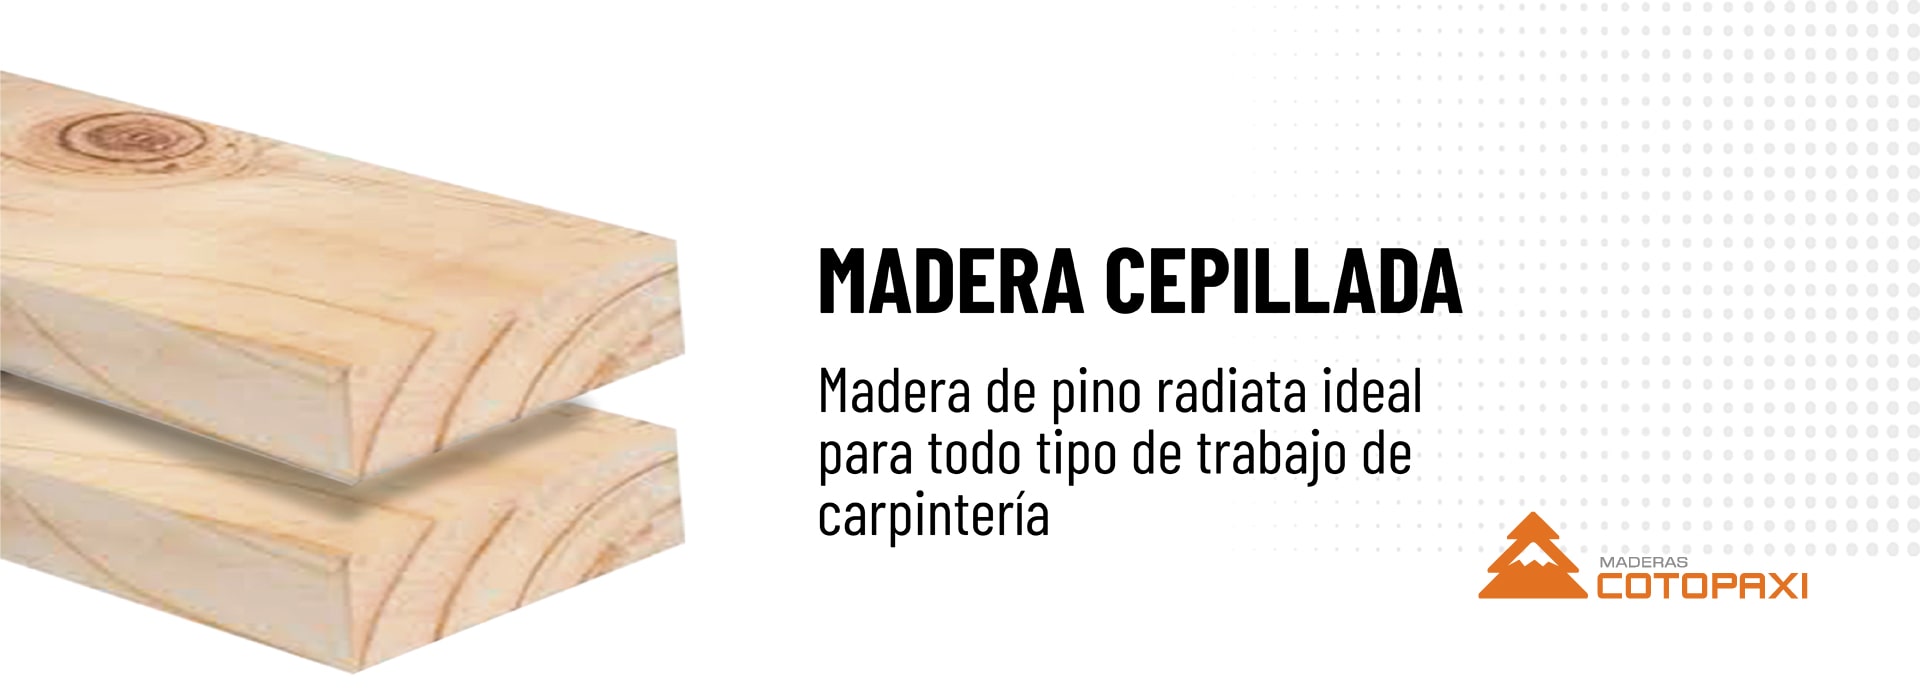 Banner Madera Cepillada